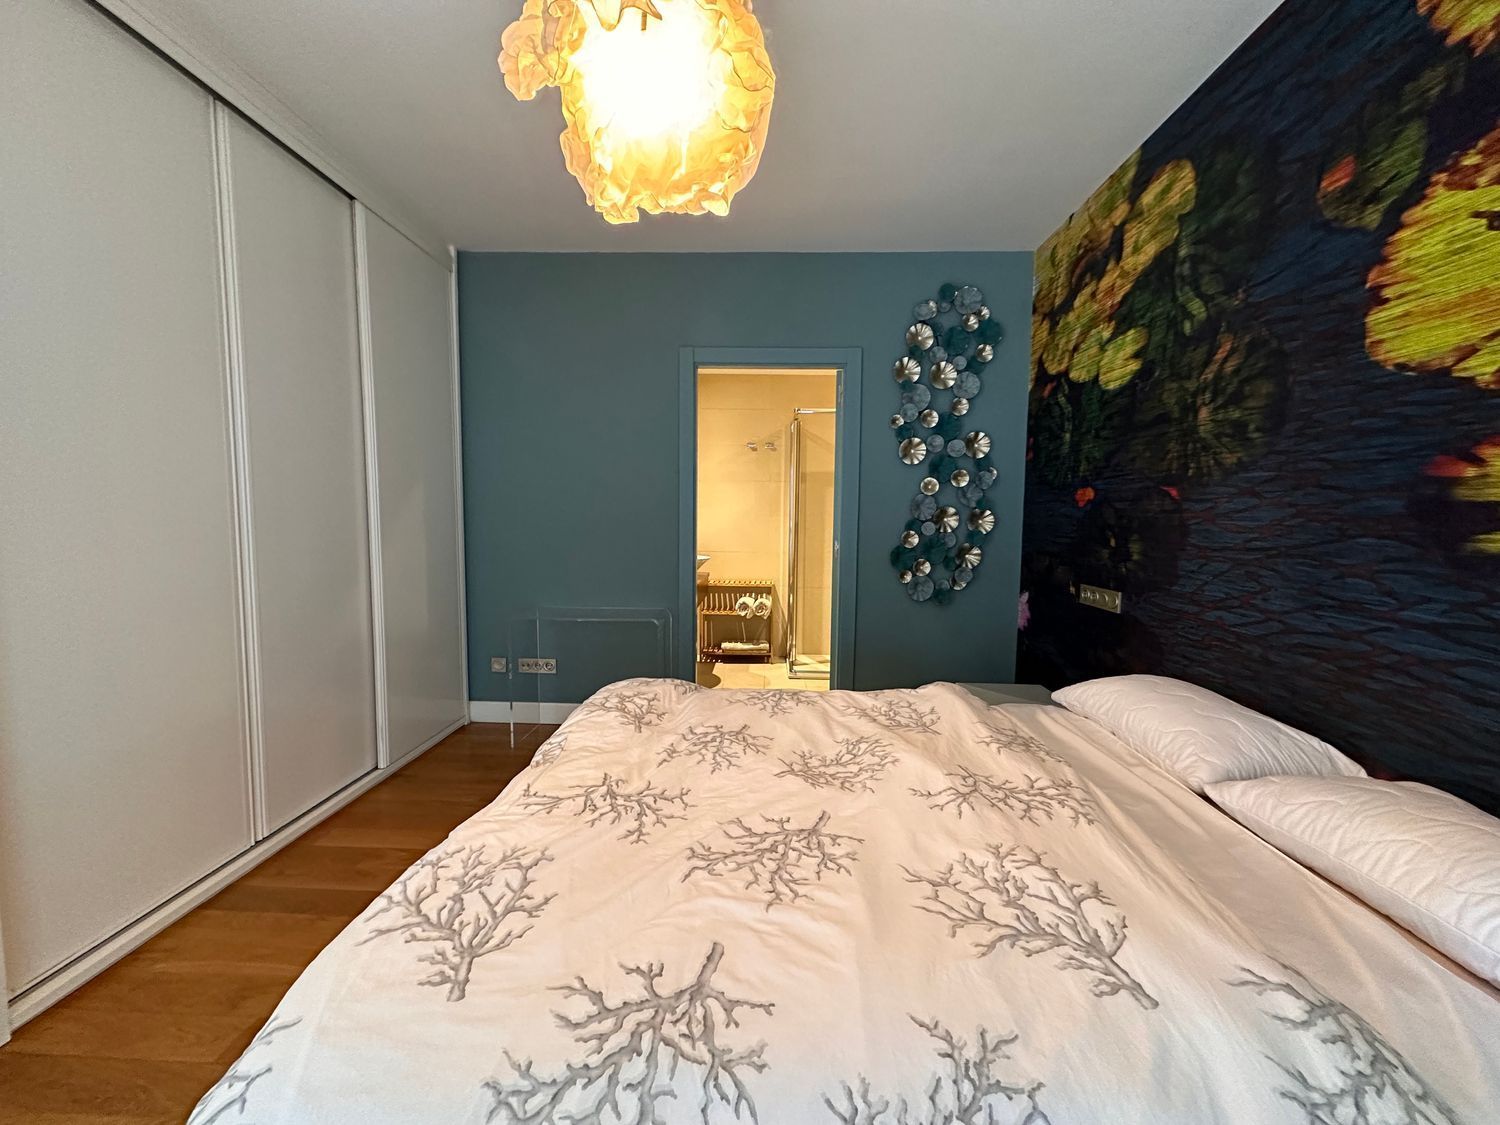 Apartamento en venta en primera línea de mar en Paseo de miraconcha, en Donostia-San Sebastian